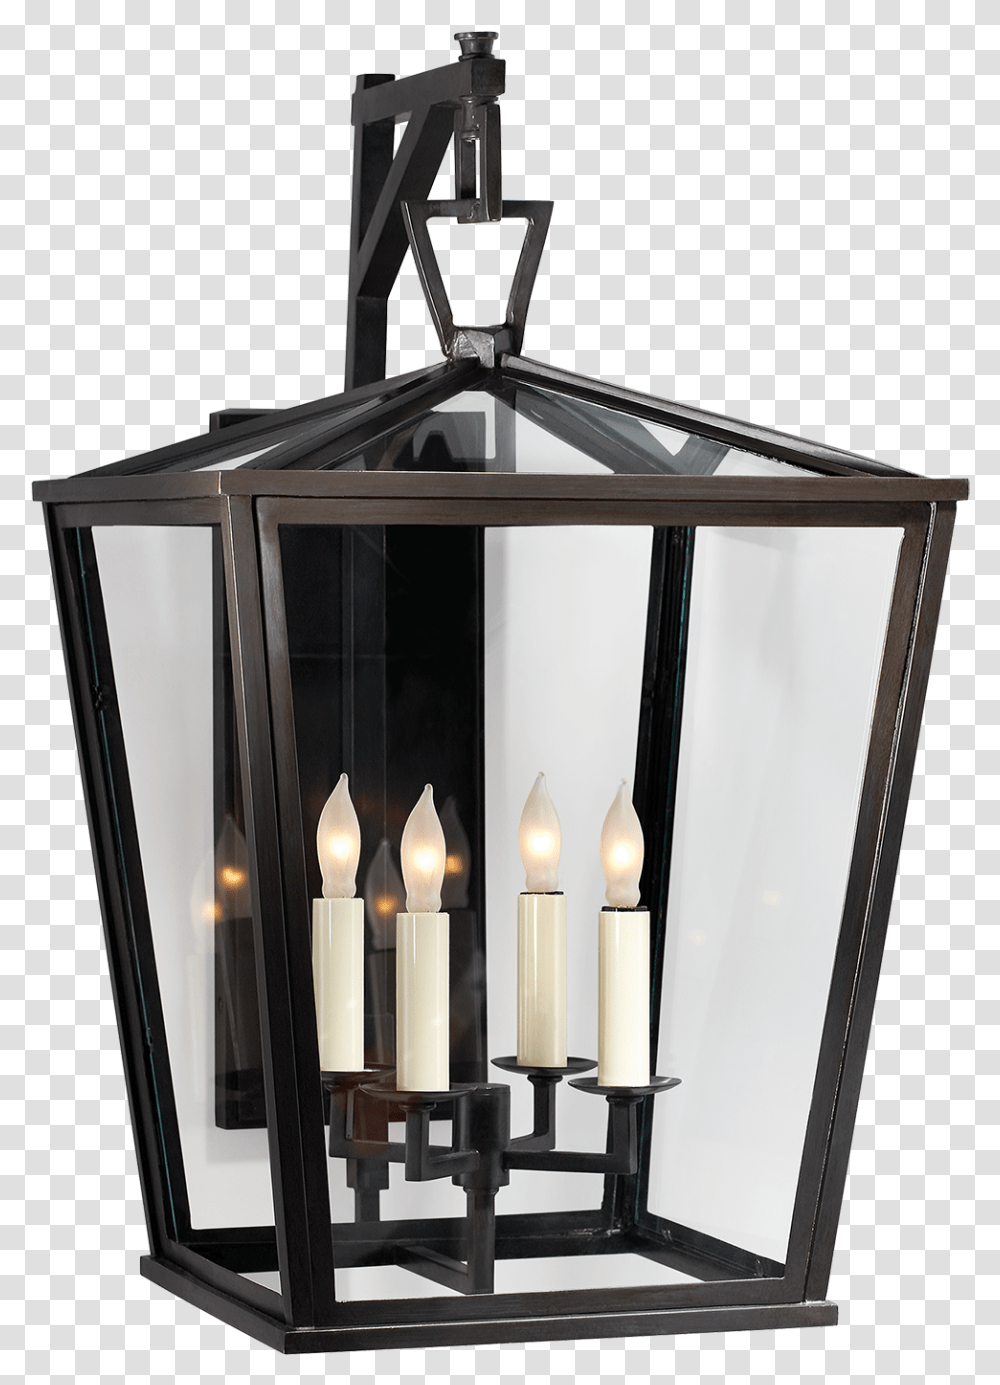 Download Decorative Lantern Images Free Hq Bracket Lantern Lighting, Lamp, Candle, Light Fixture, Lampshade Transparent Png